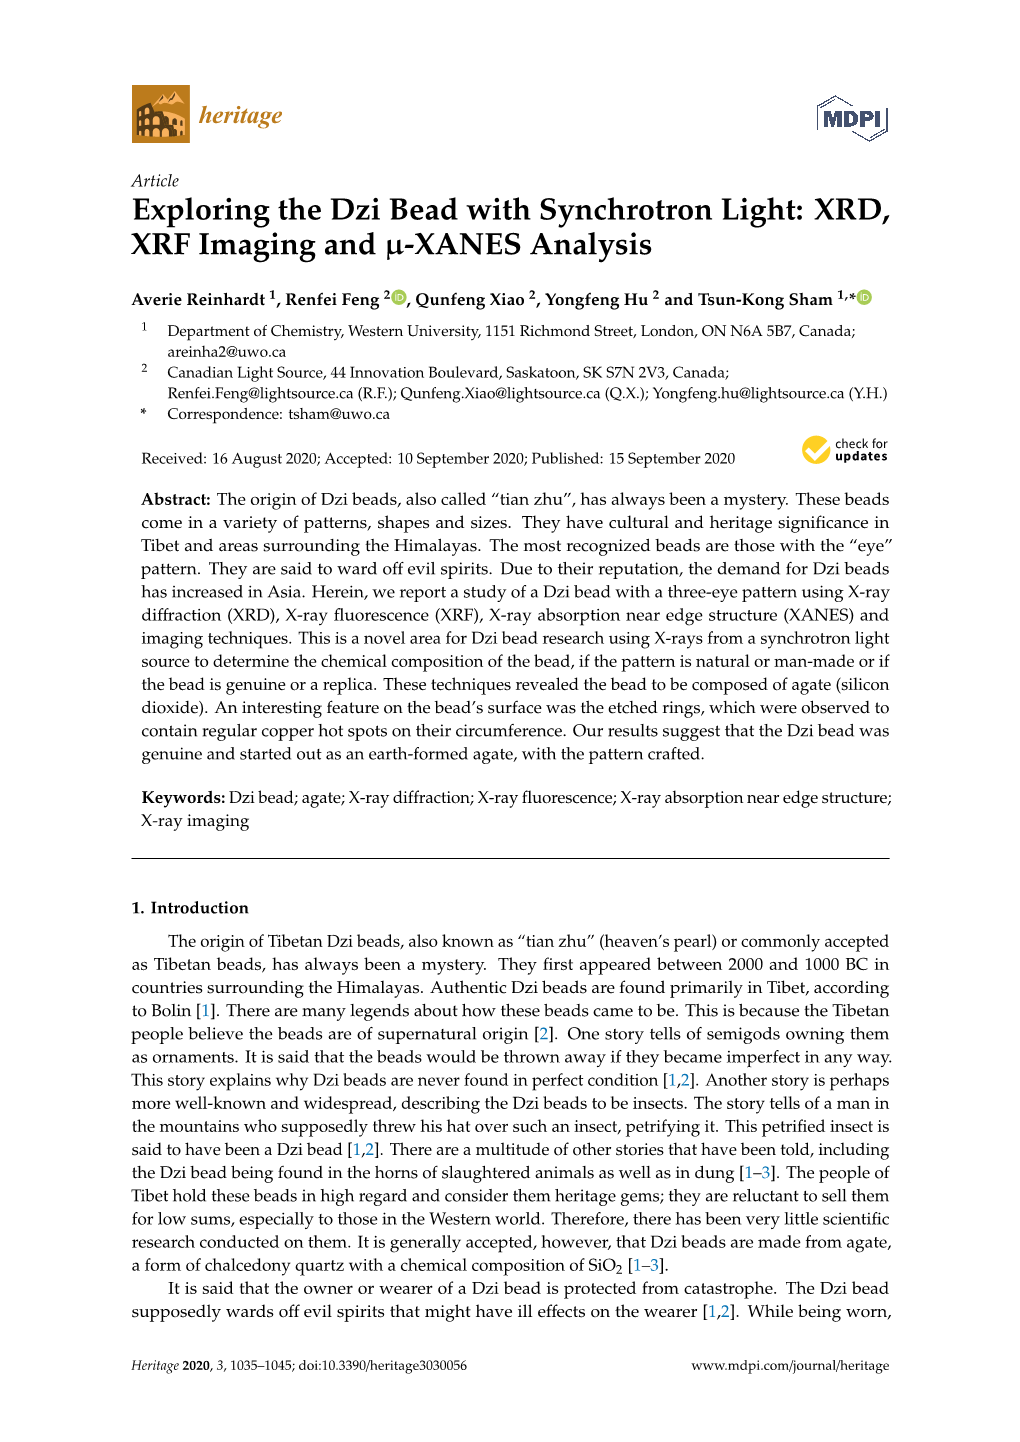 Exploring the Dzi Bead with Synchrotron Light: XRD, XRF Imaging and Μ-XANES Analysis